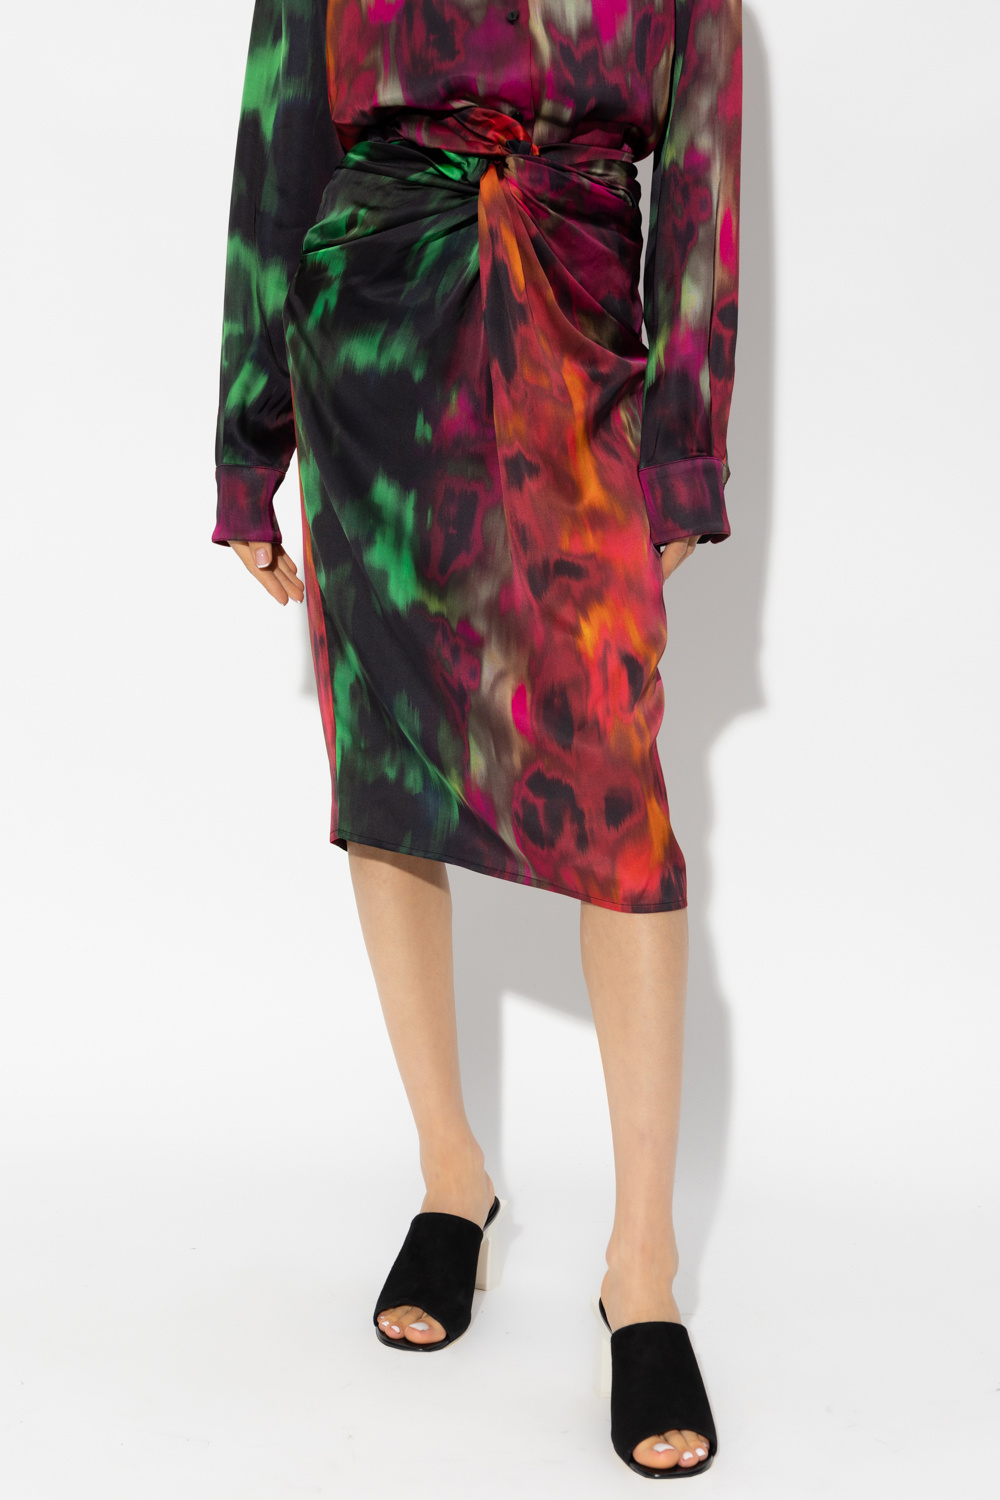 Birgitte Herskind ‘Erin’ patterned skirt